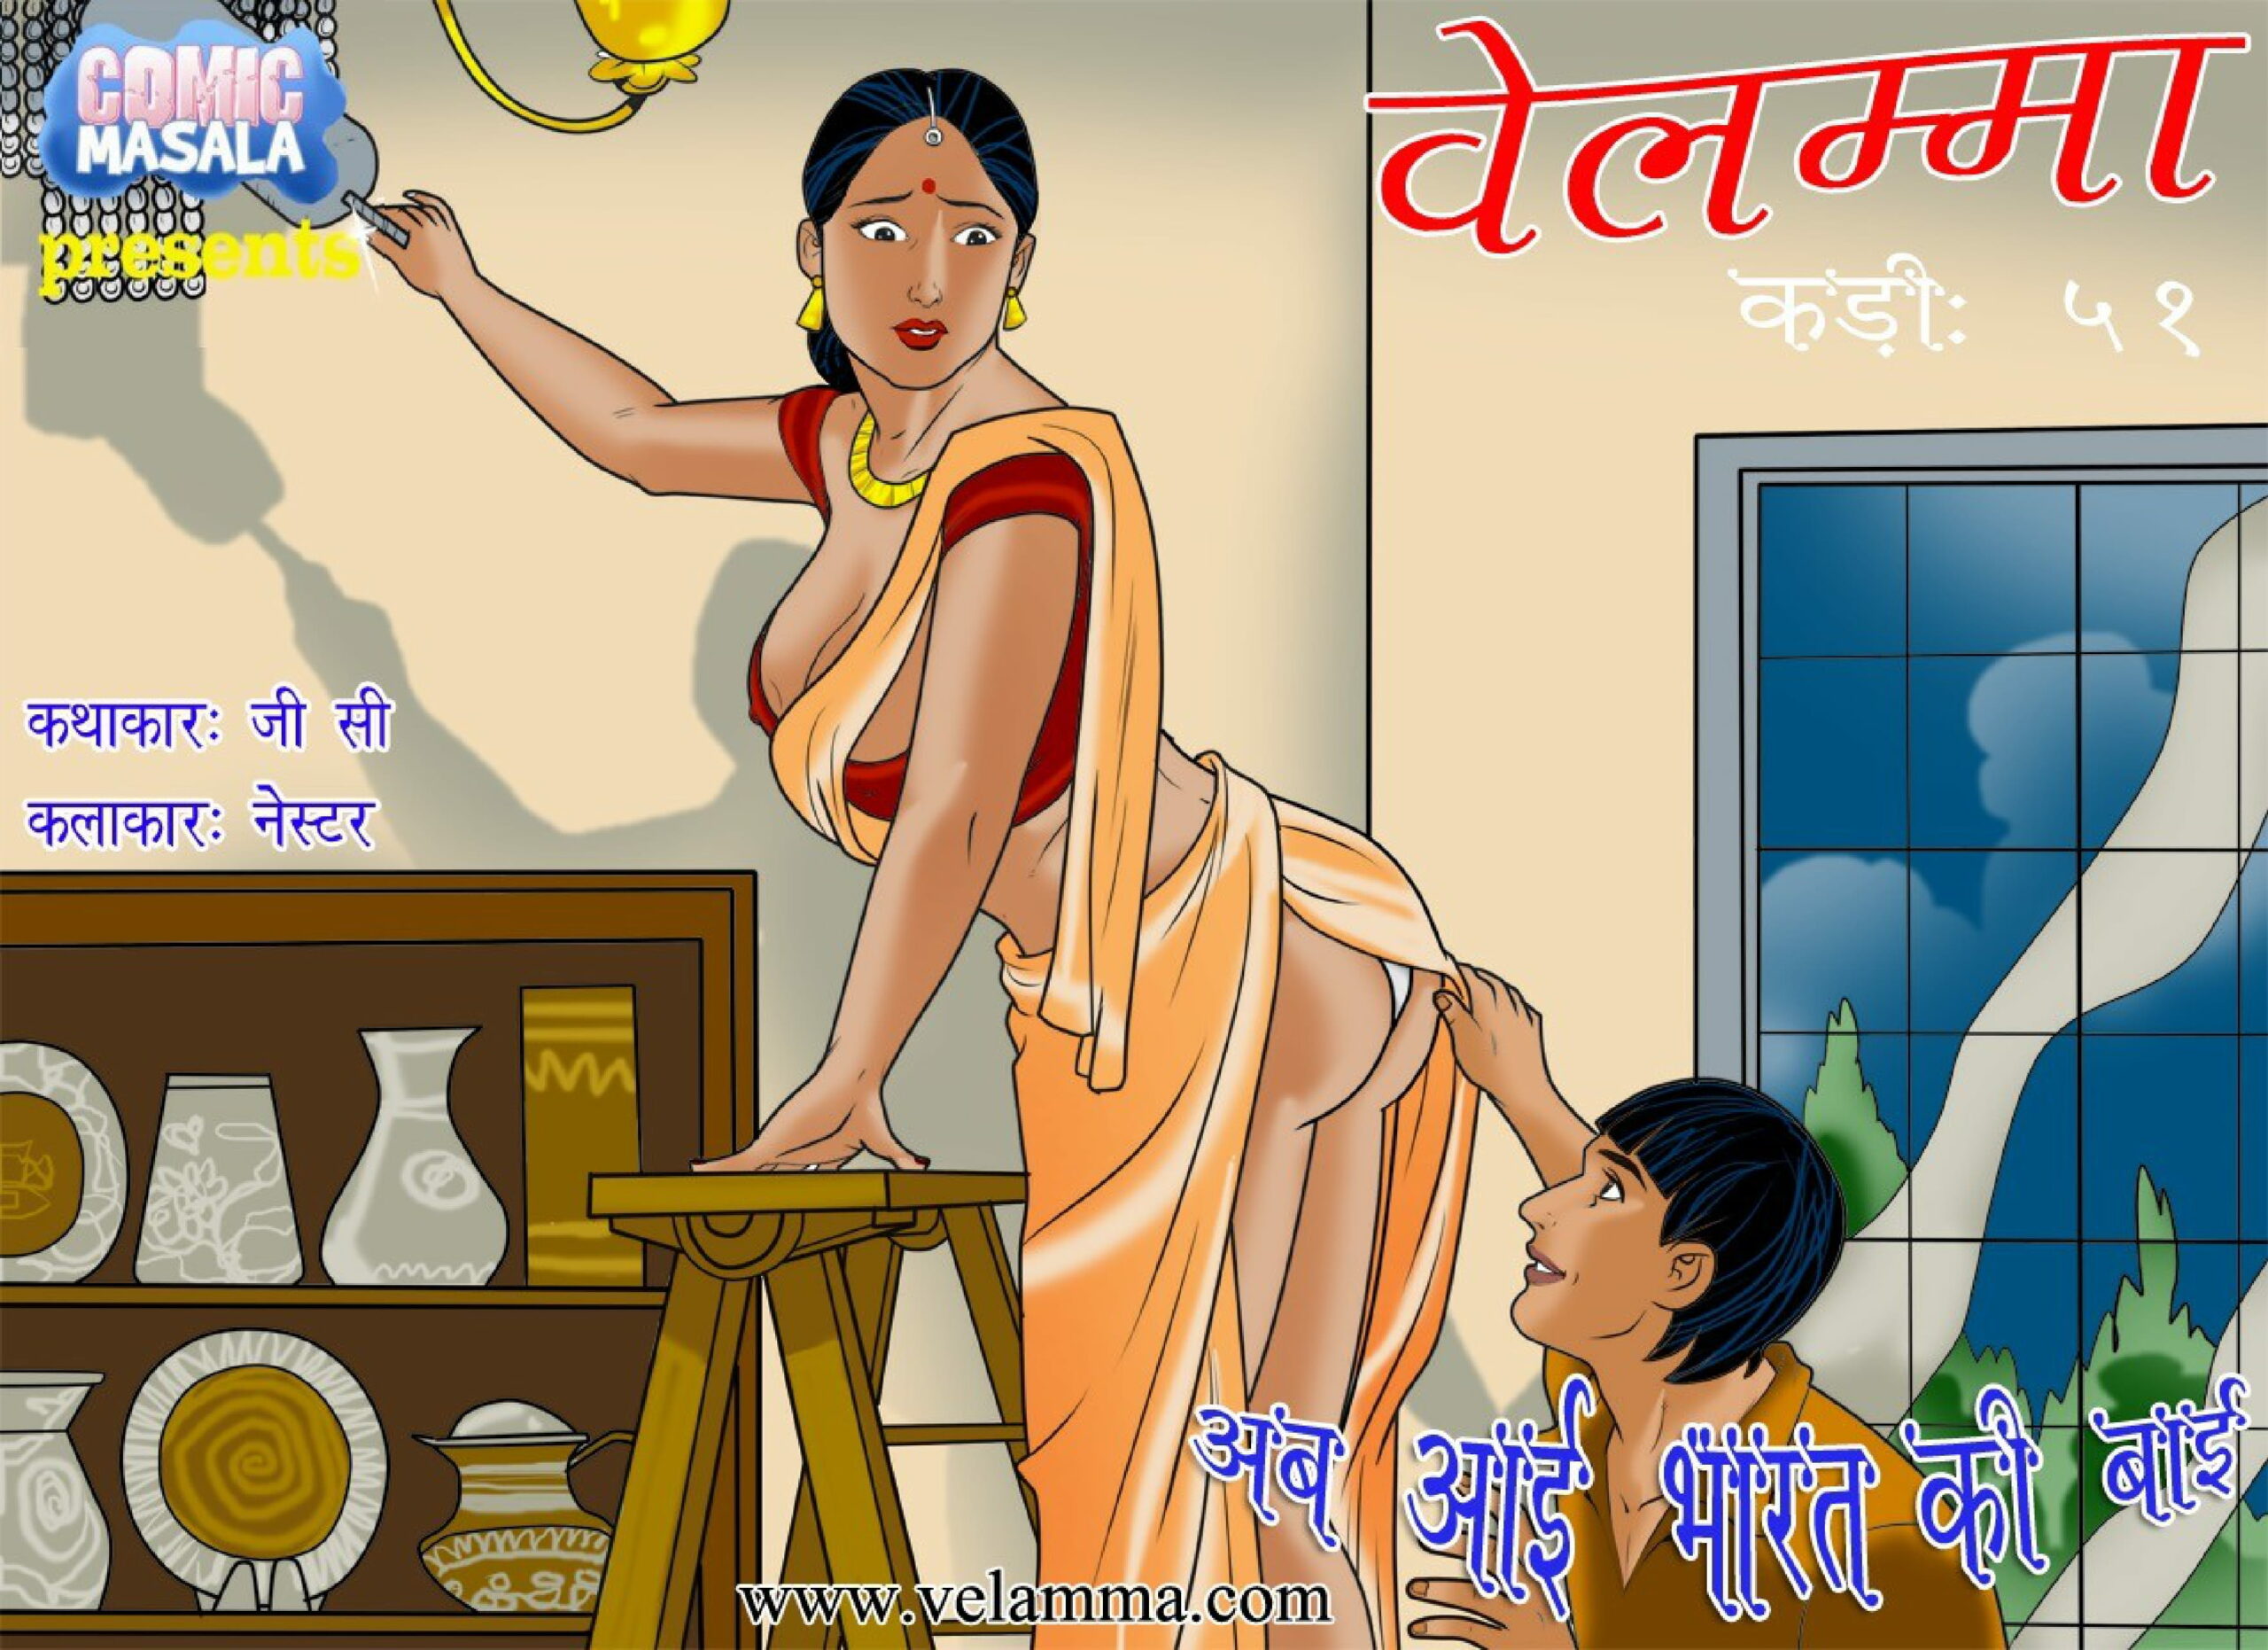 Velamma Episode 51 Hindi – Bhartiya naukrani (भारतीय नौकरानी) - 3 - FSIComics